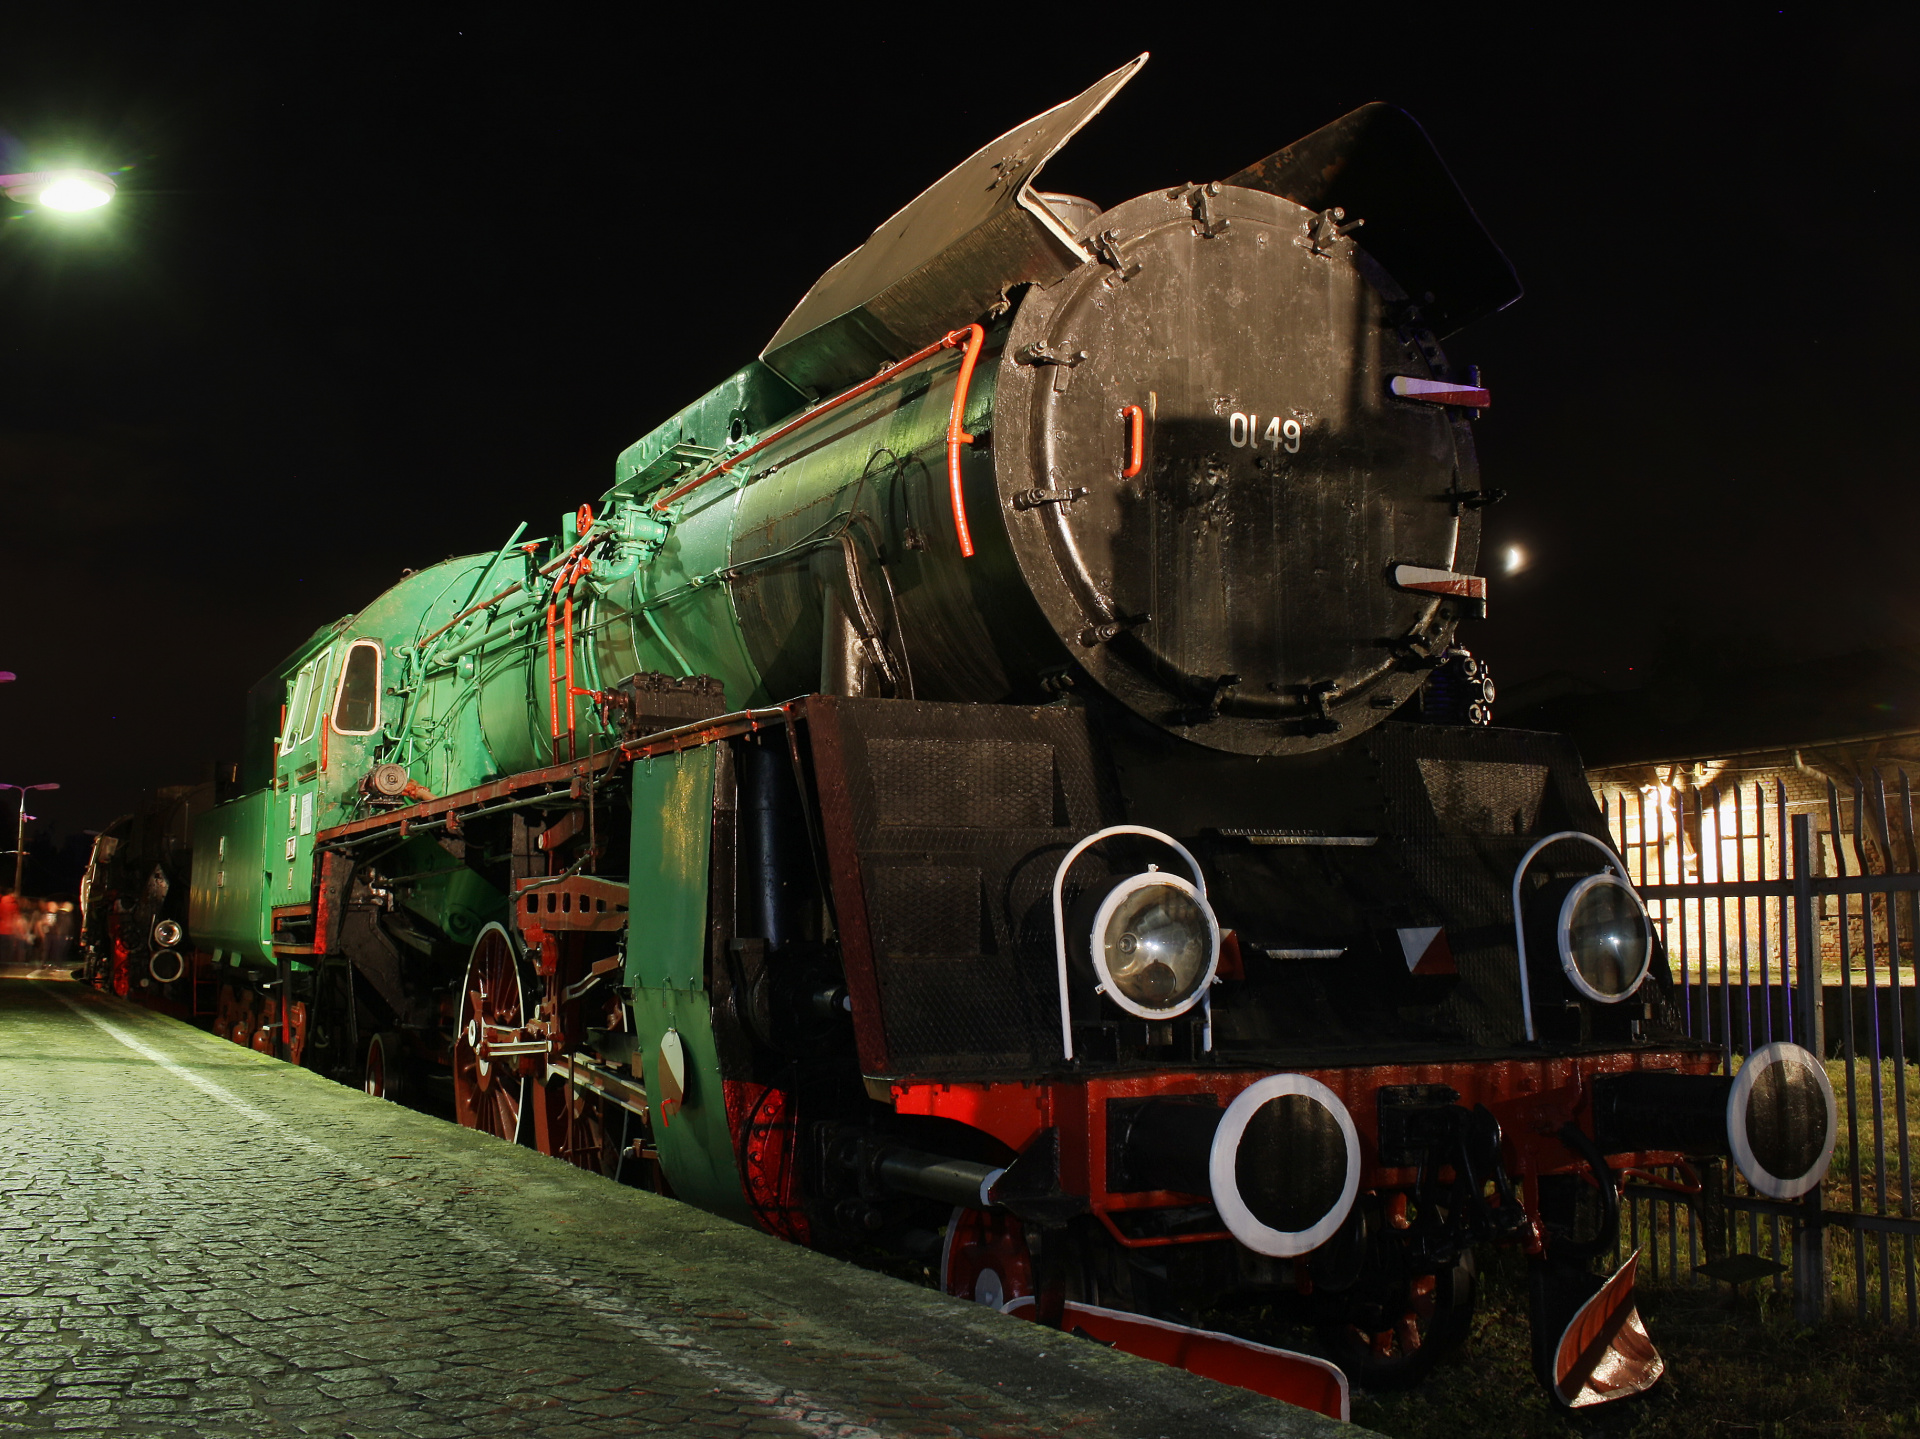 Ol49 (Vehicles » Trains and Locomotives)